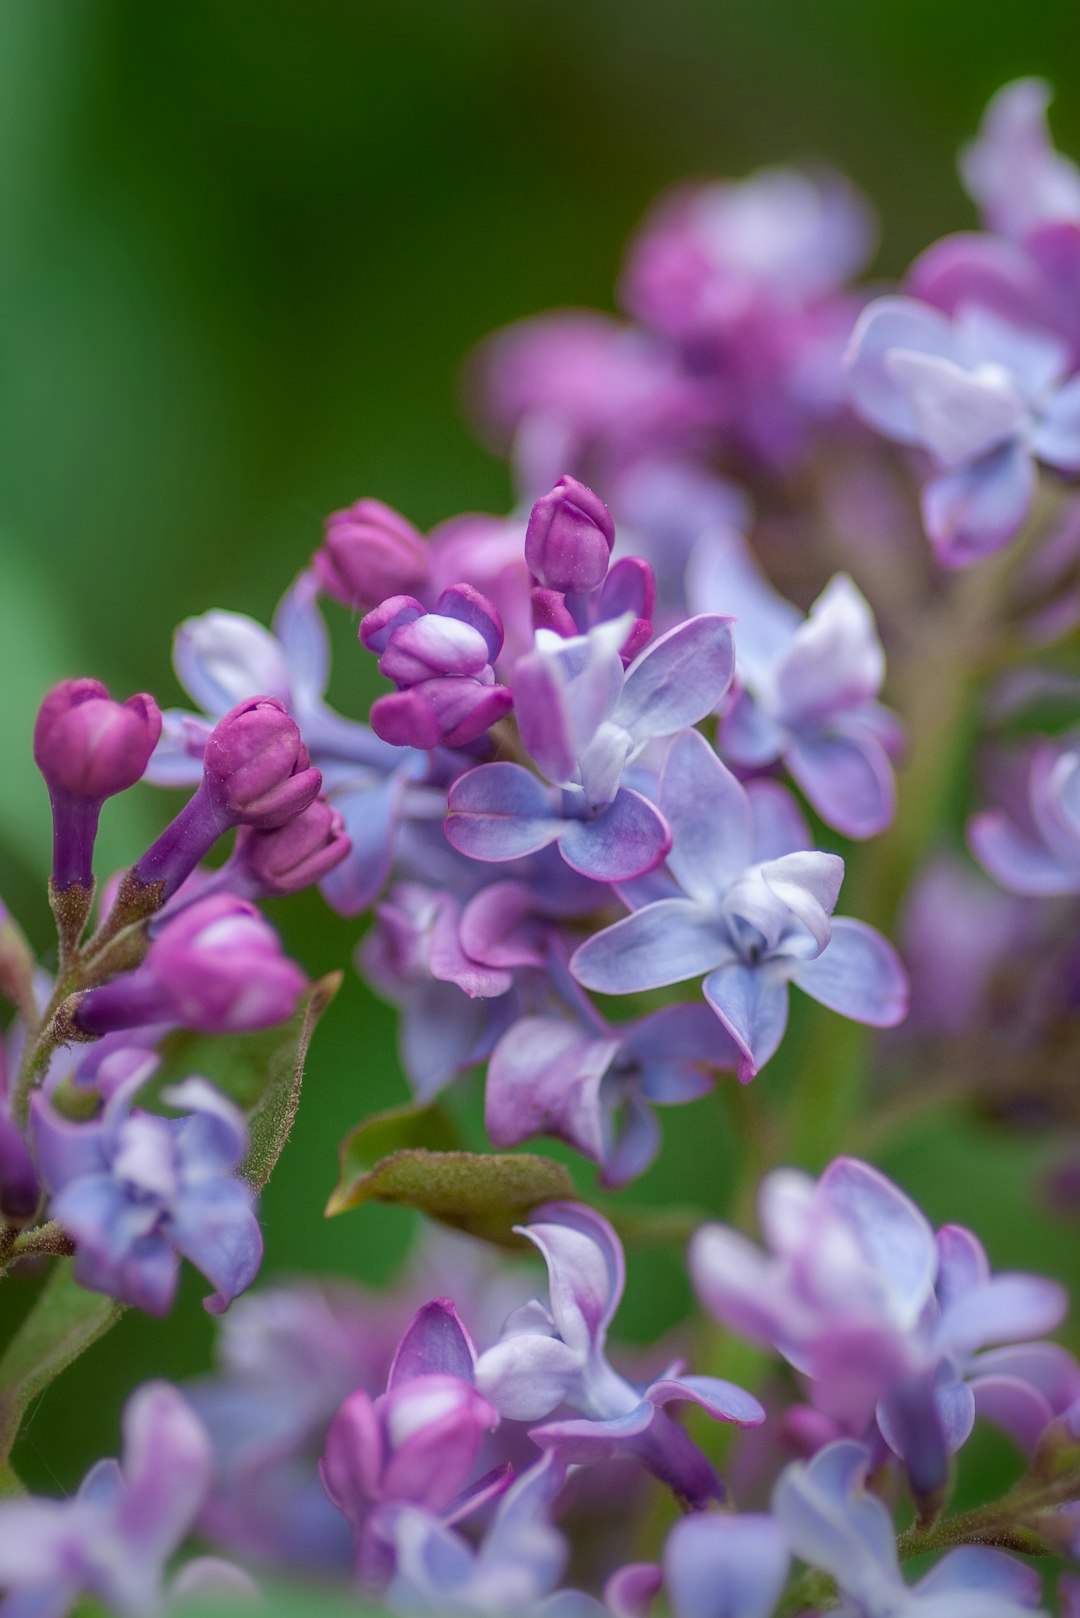 tree mallow, blossom, purple-petaled flowers